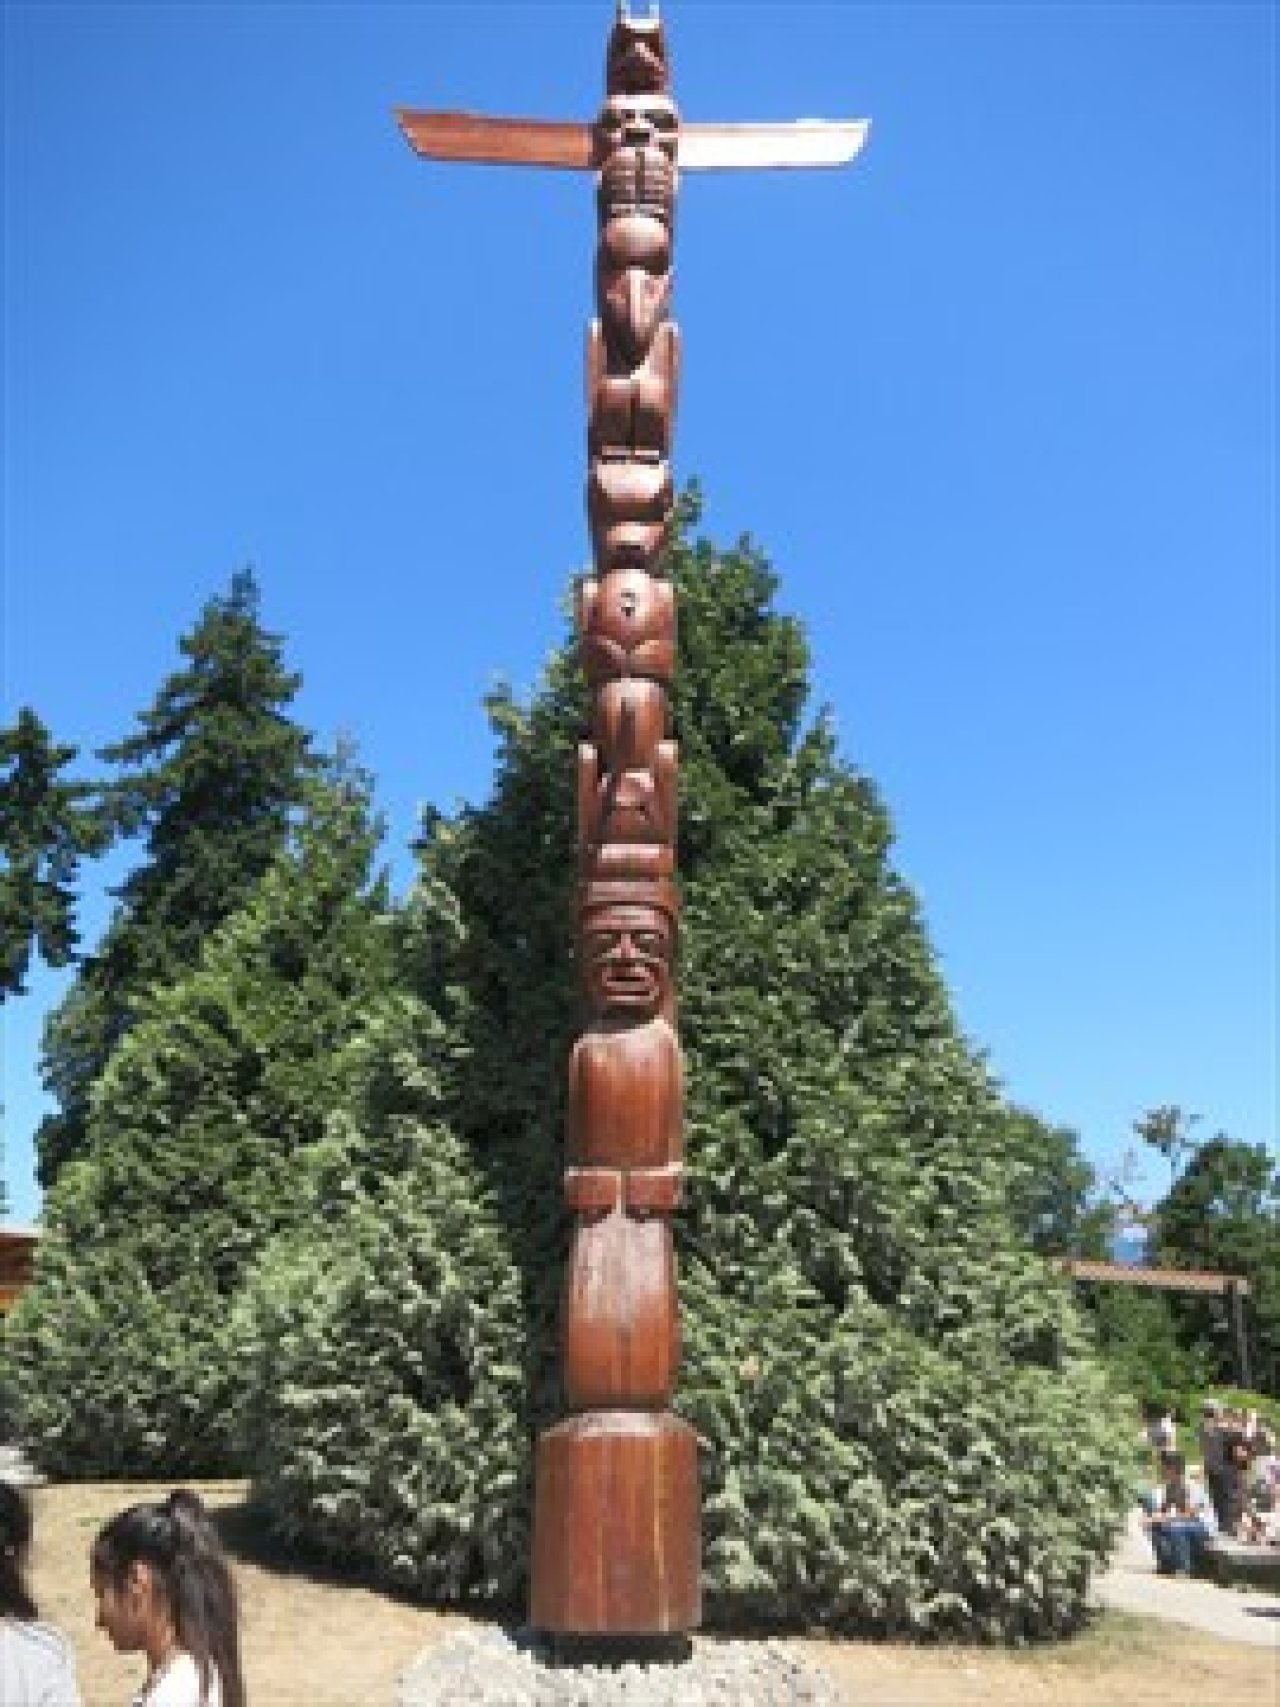 Rose Cole Yelton Memorial Totem Pole. Source: http://stanleyparkvan.com/stanley-park-van-attractions-totem-poles.html